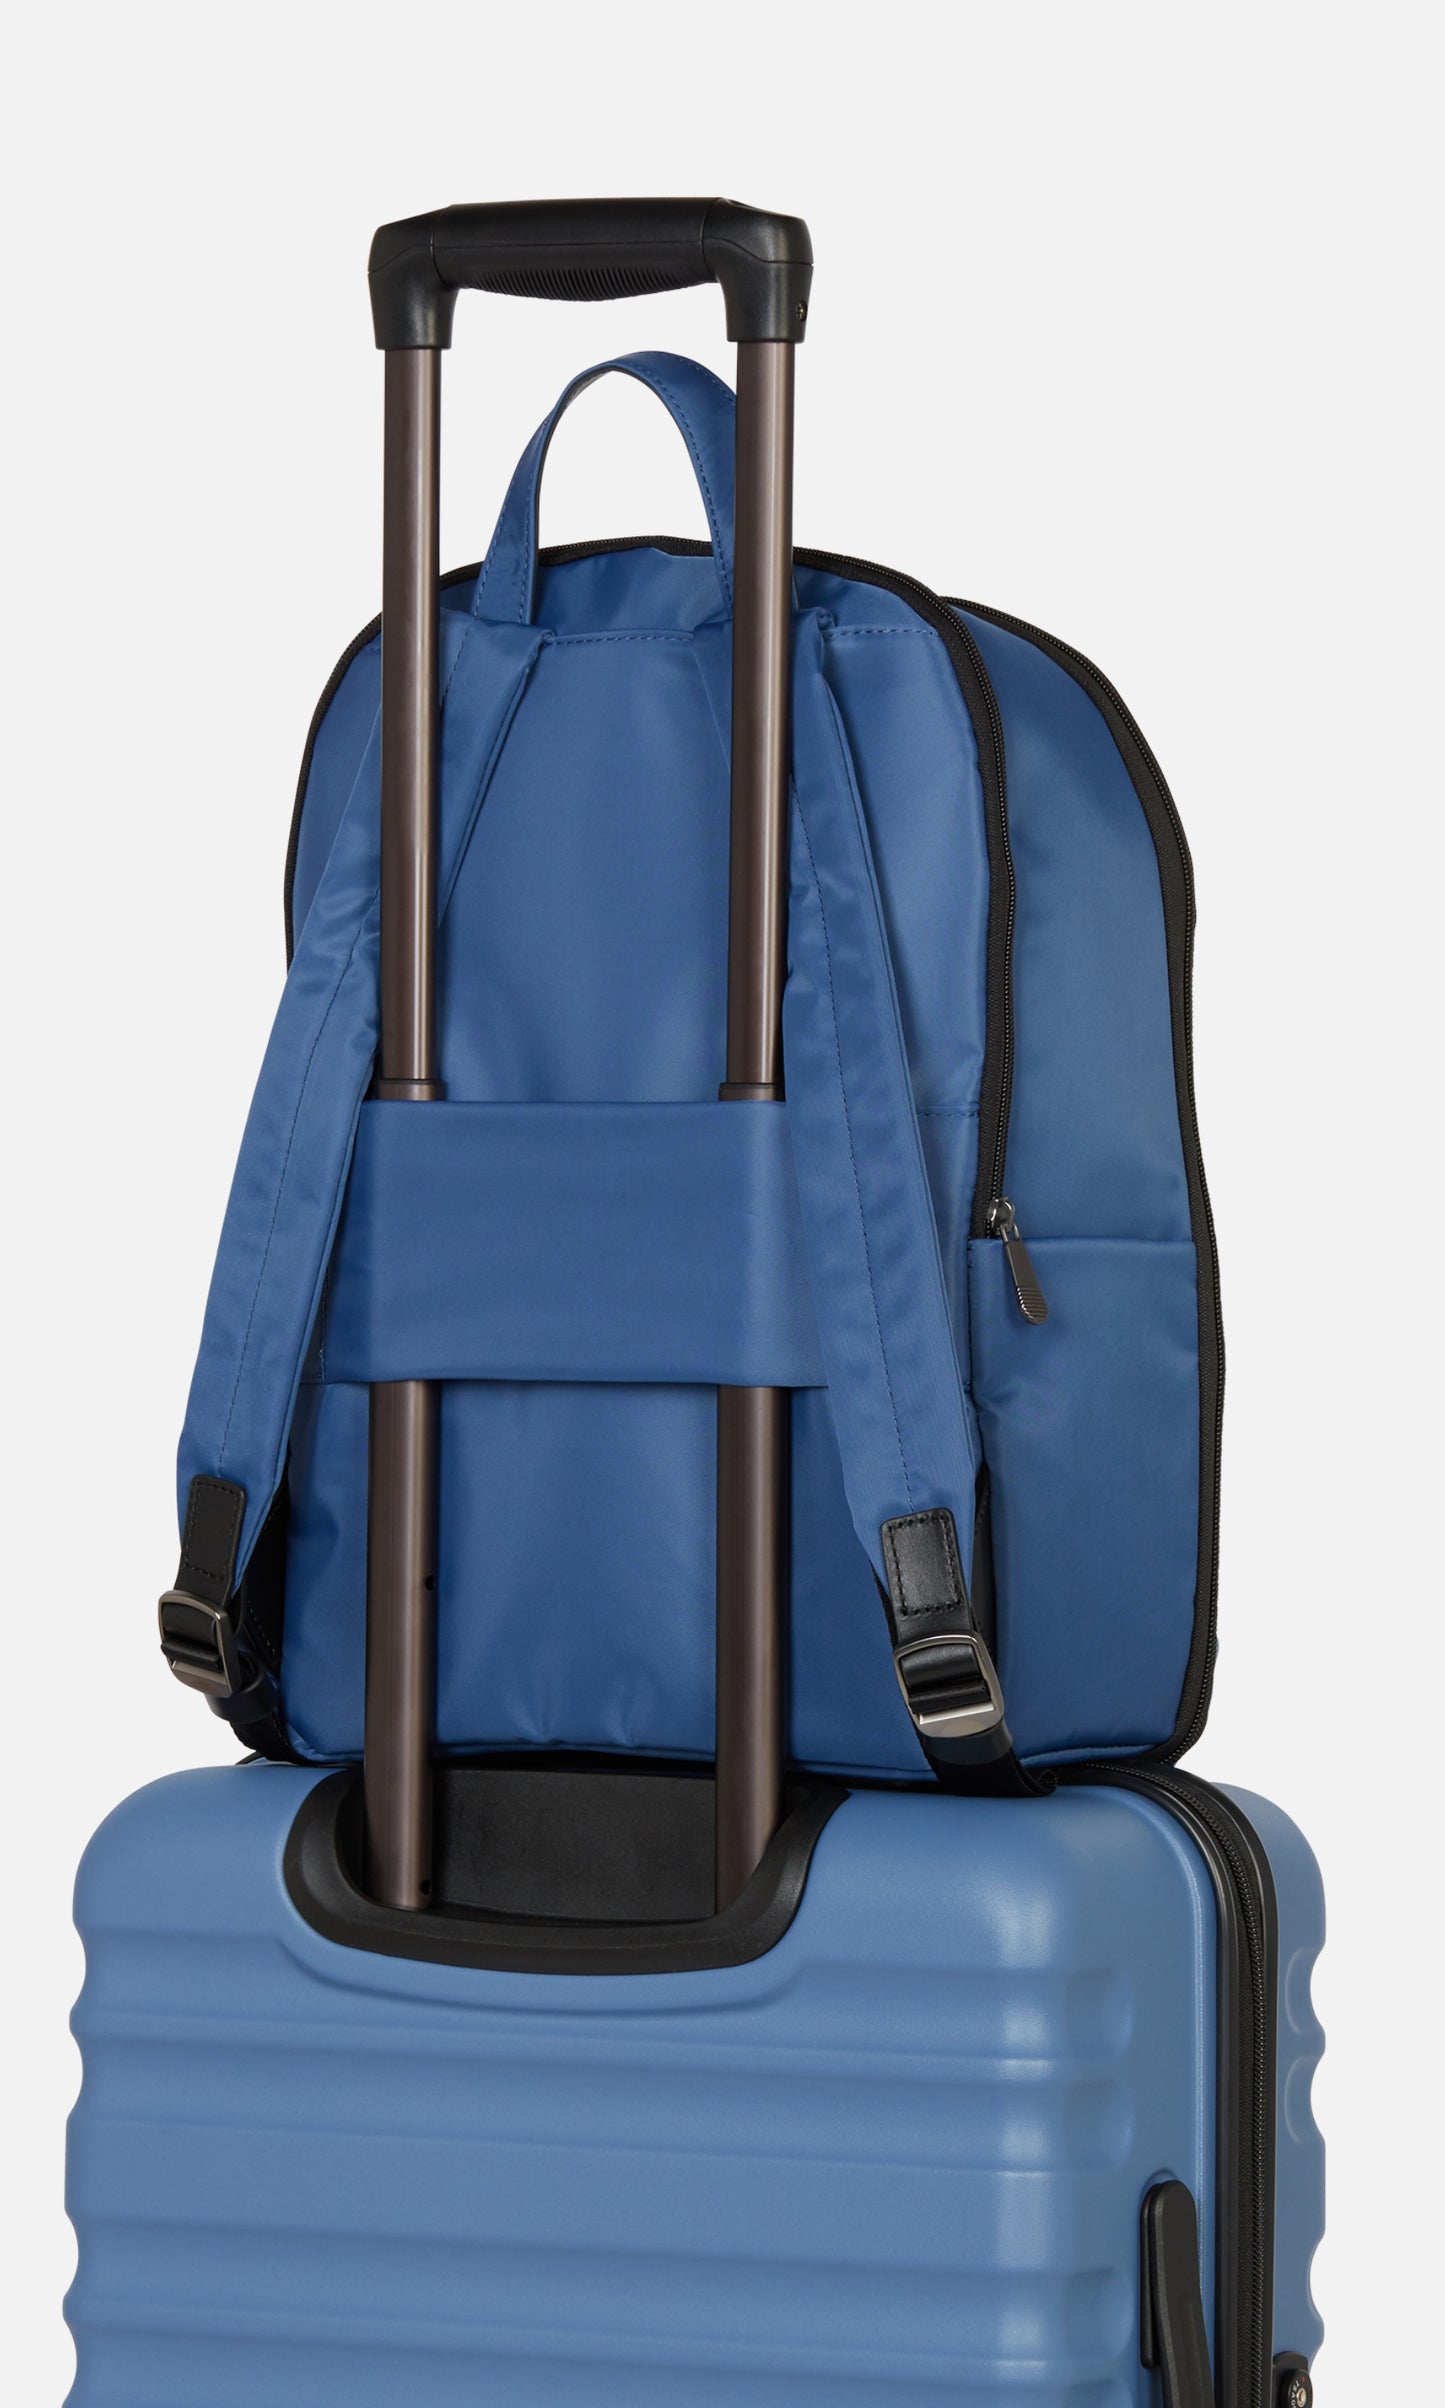 Chelsea backpack in azure